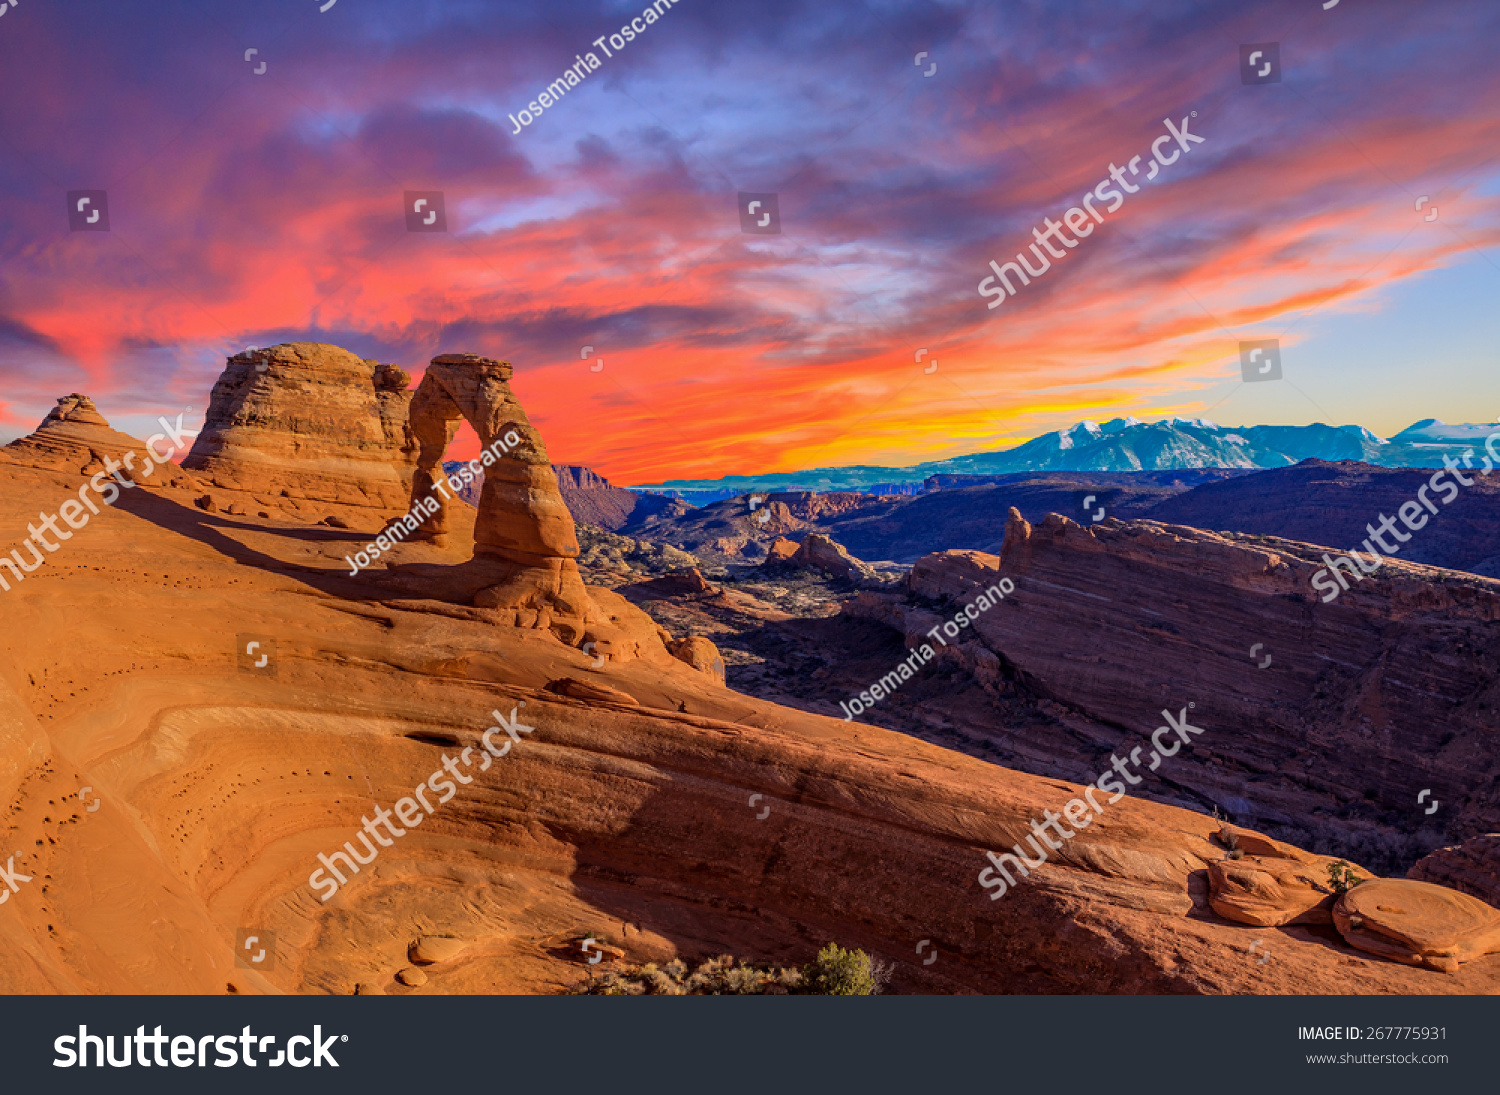 Beautiful Sunset Image taken at Arches National Park in Utah #267775931